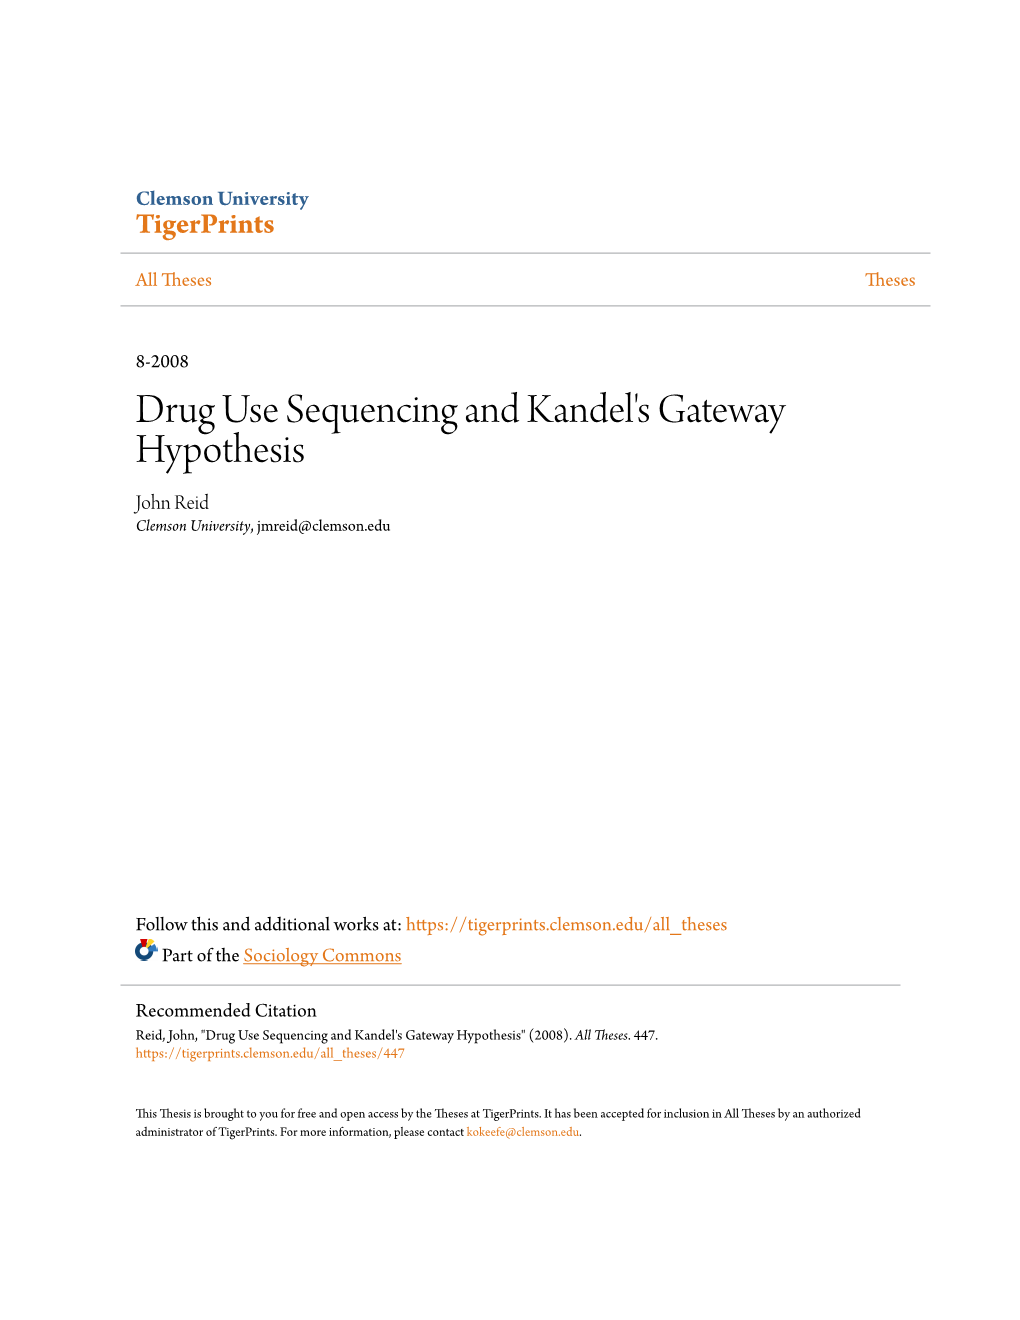 Drug Use Sequencing and Kandel's Gateway Hypothesis John Reid Clemson University, Jmreid@Clemson.Edu